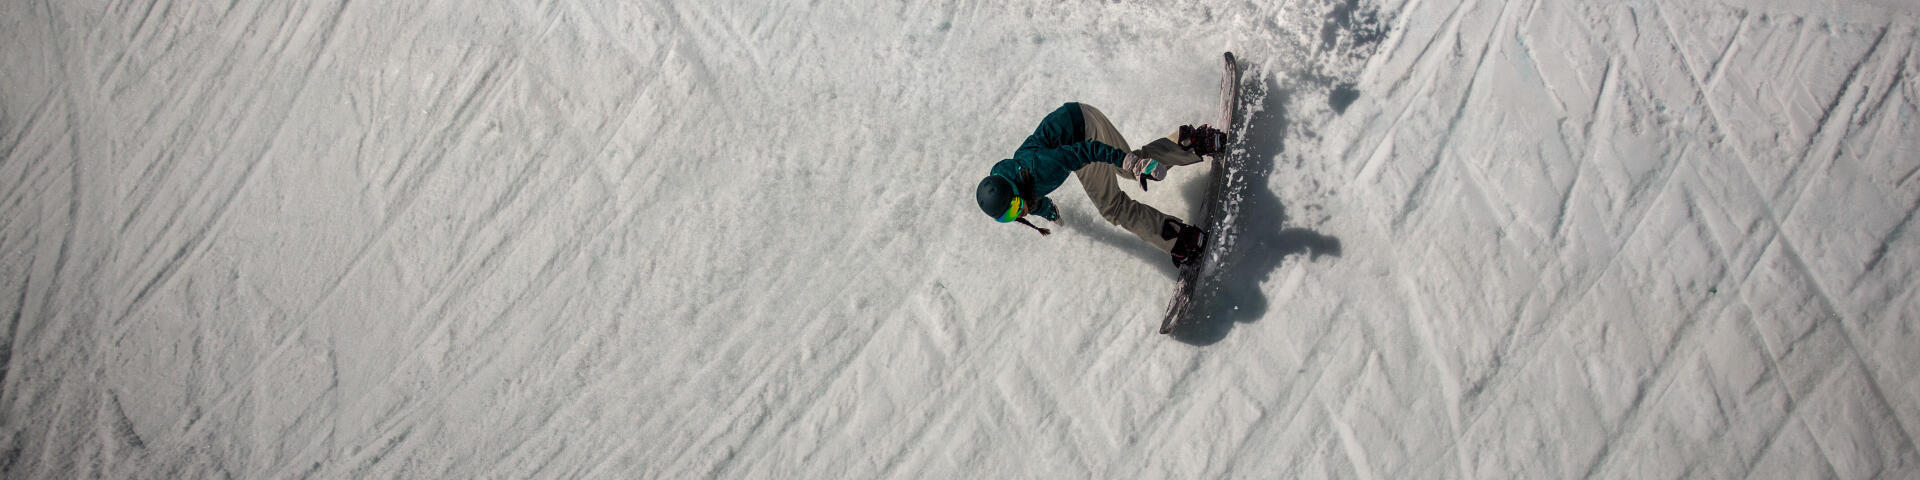 lexique snowboard